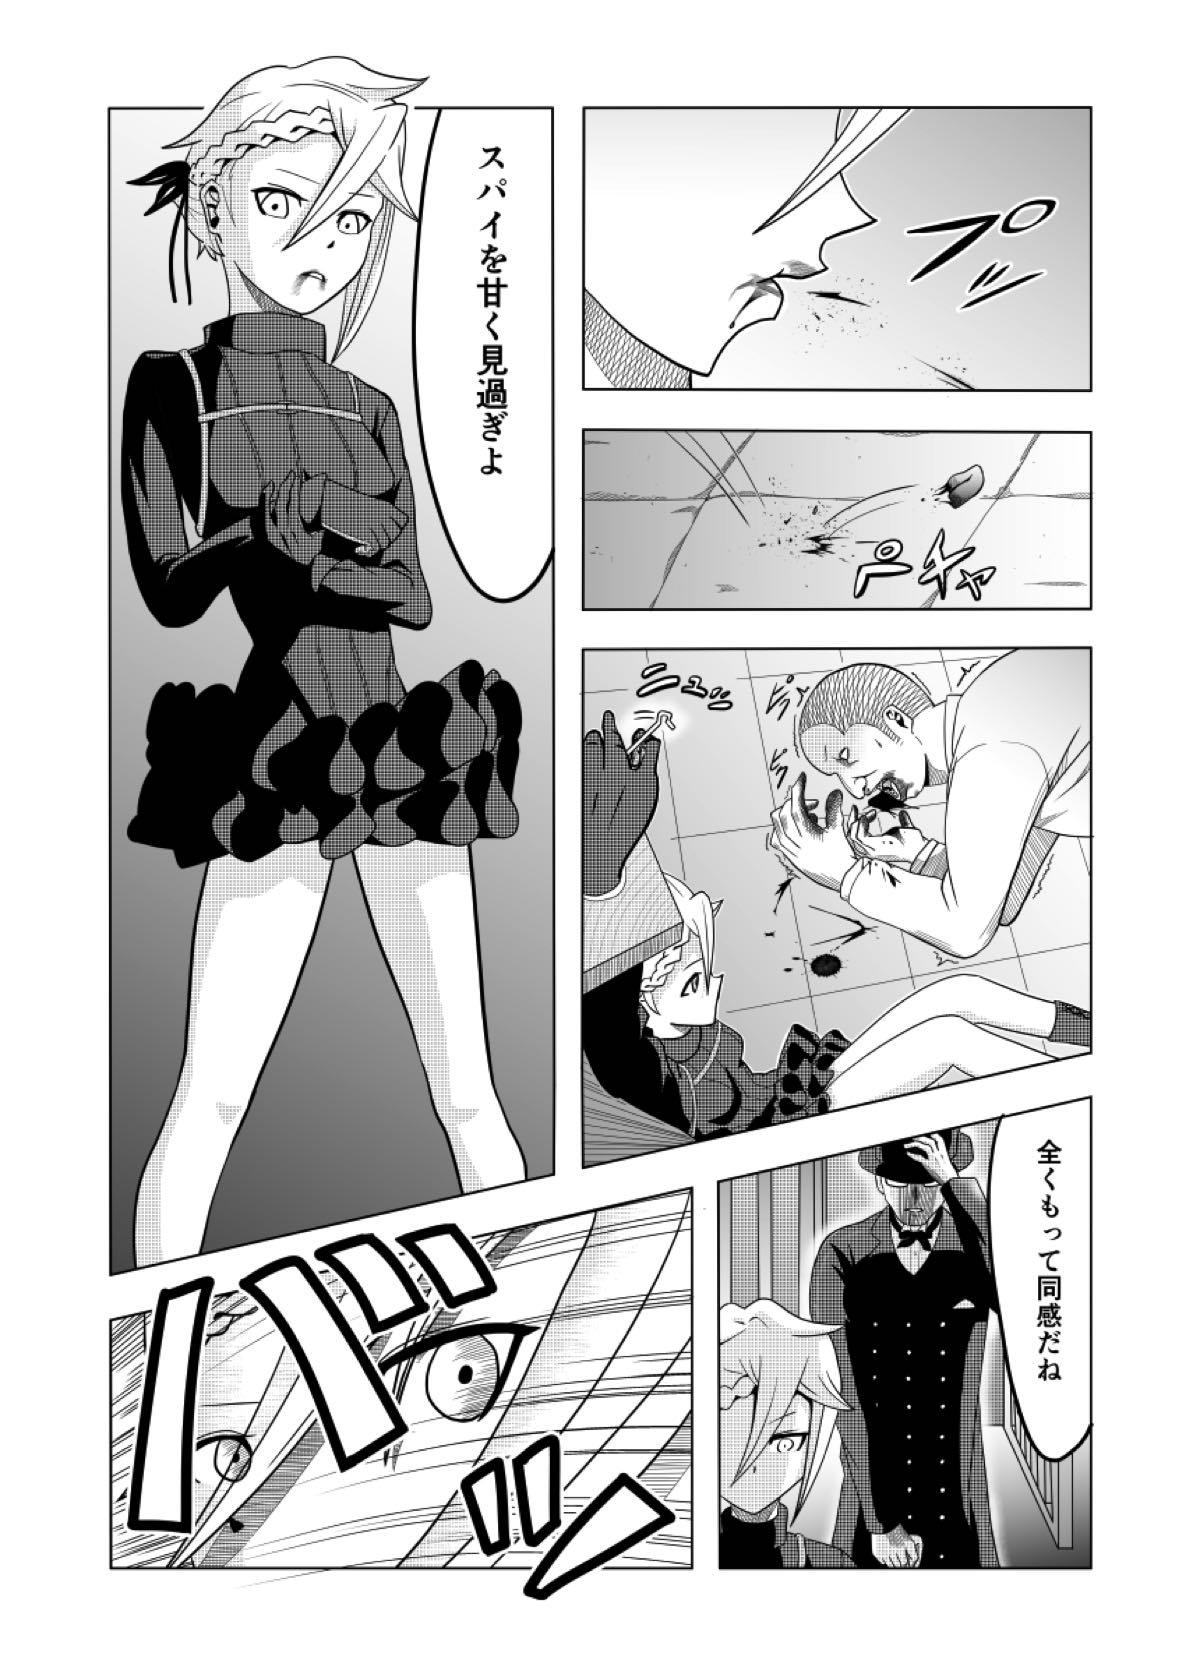 Bare 捕まったスパイ - Princess principal Nerd - Page 4